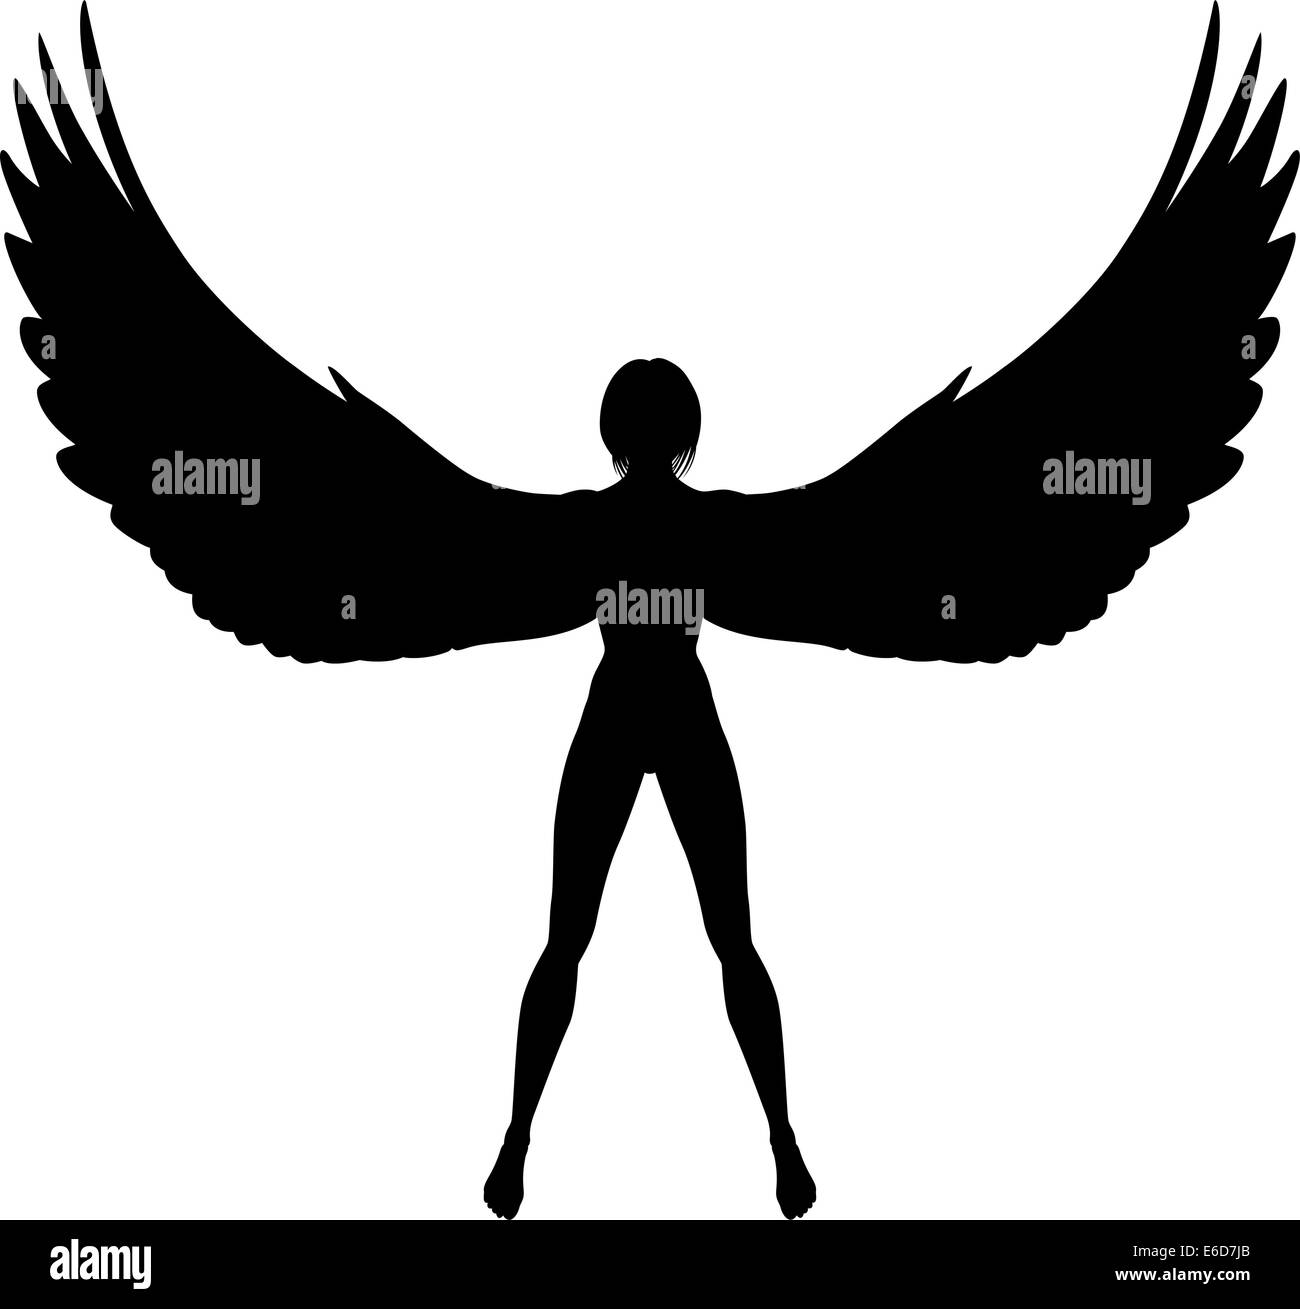 Bearbeitbares Vektor Silhouette einer Frau oder Engel mit Flügeln Stock Vektor